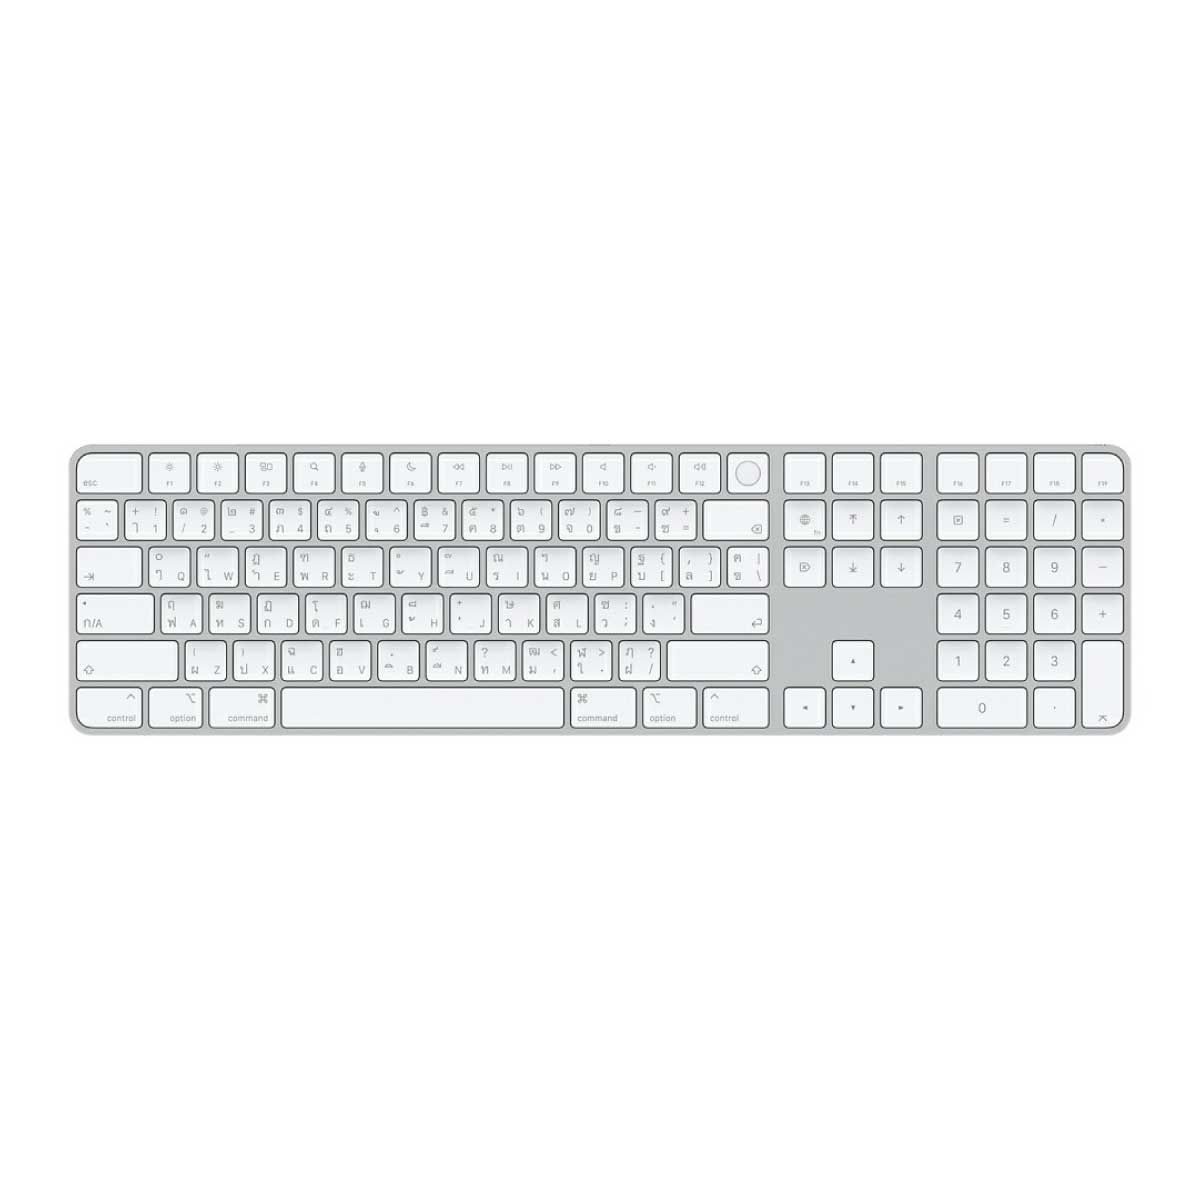 Apple Magic Keyboard พร้อม Touch ID และปุ่มตัวเลข สำหรับ Mac ไทย